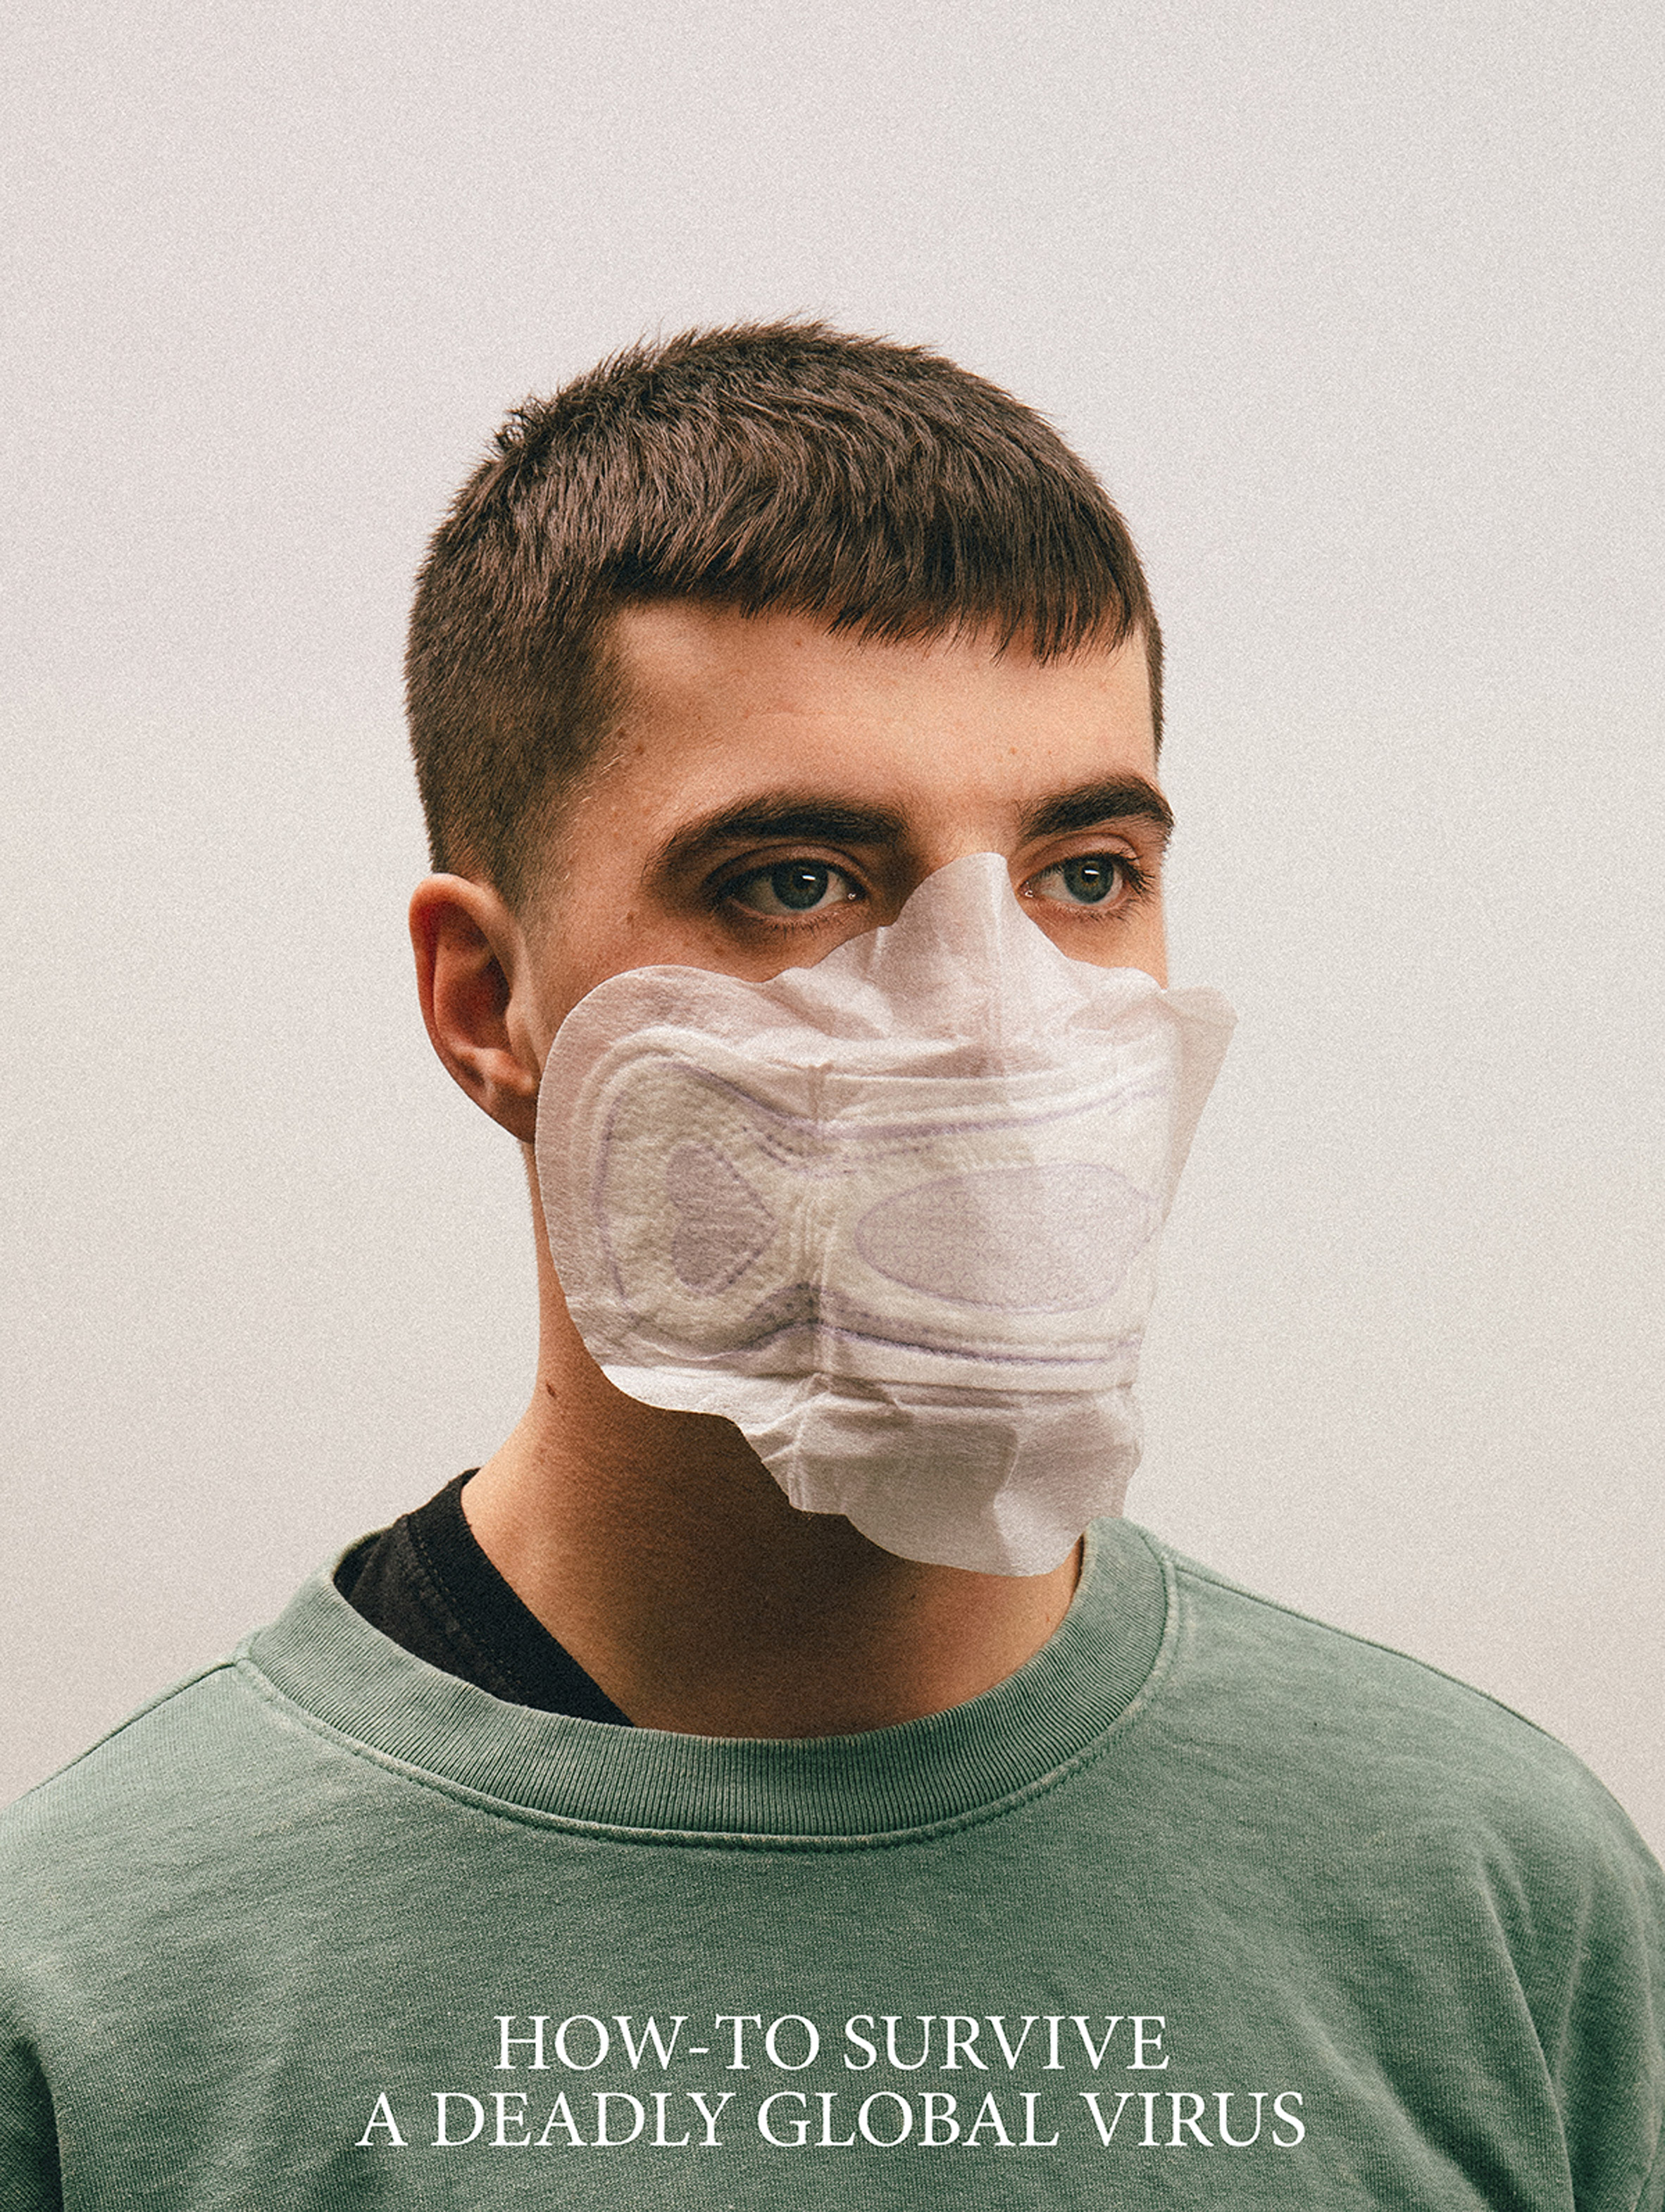 Alternative Coronavirus masks by Max Siedentopf with sanitary pad